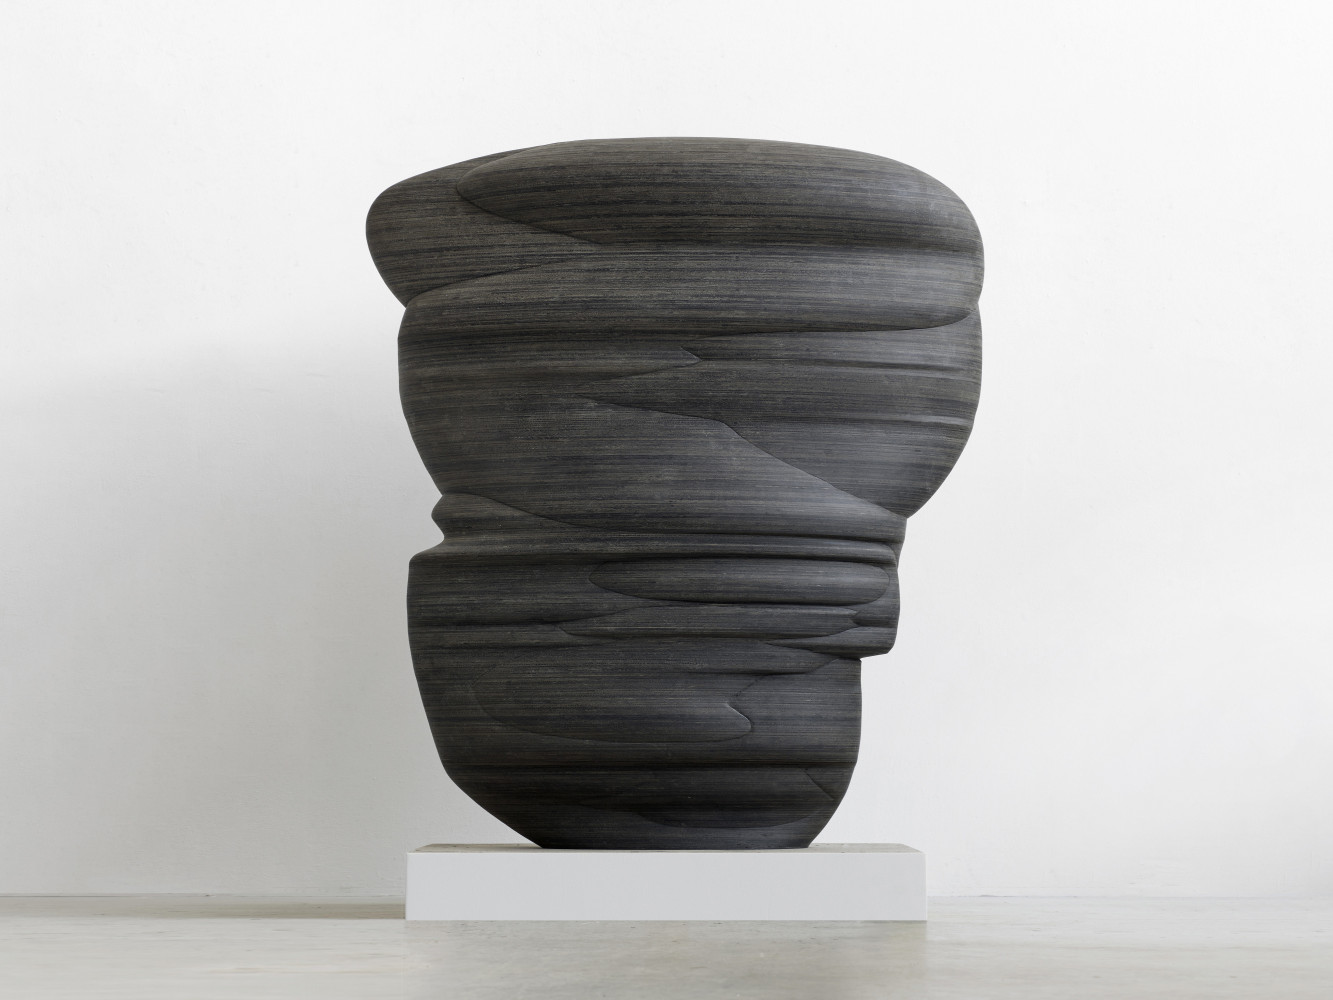 Tony Cragg, ‘Masks’, 2020, Wood